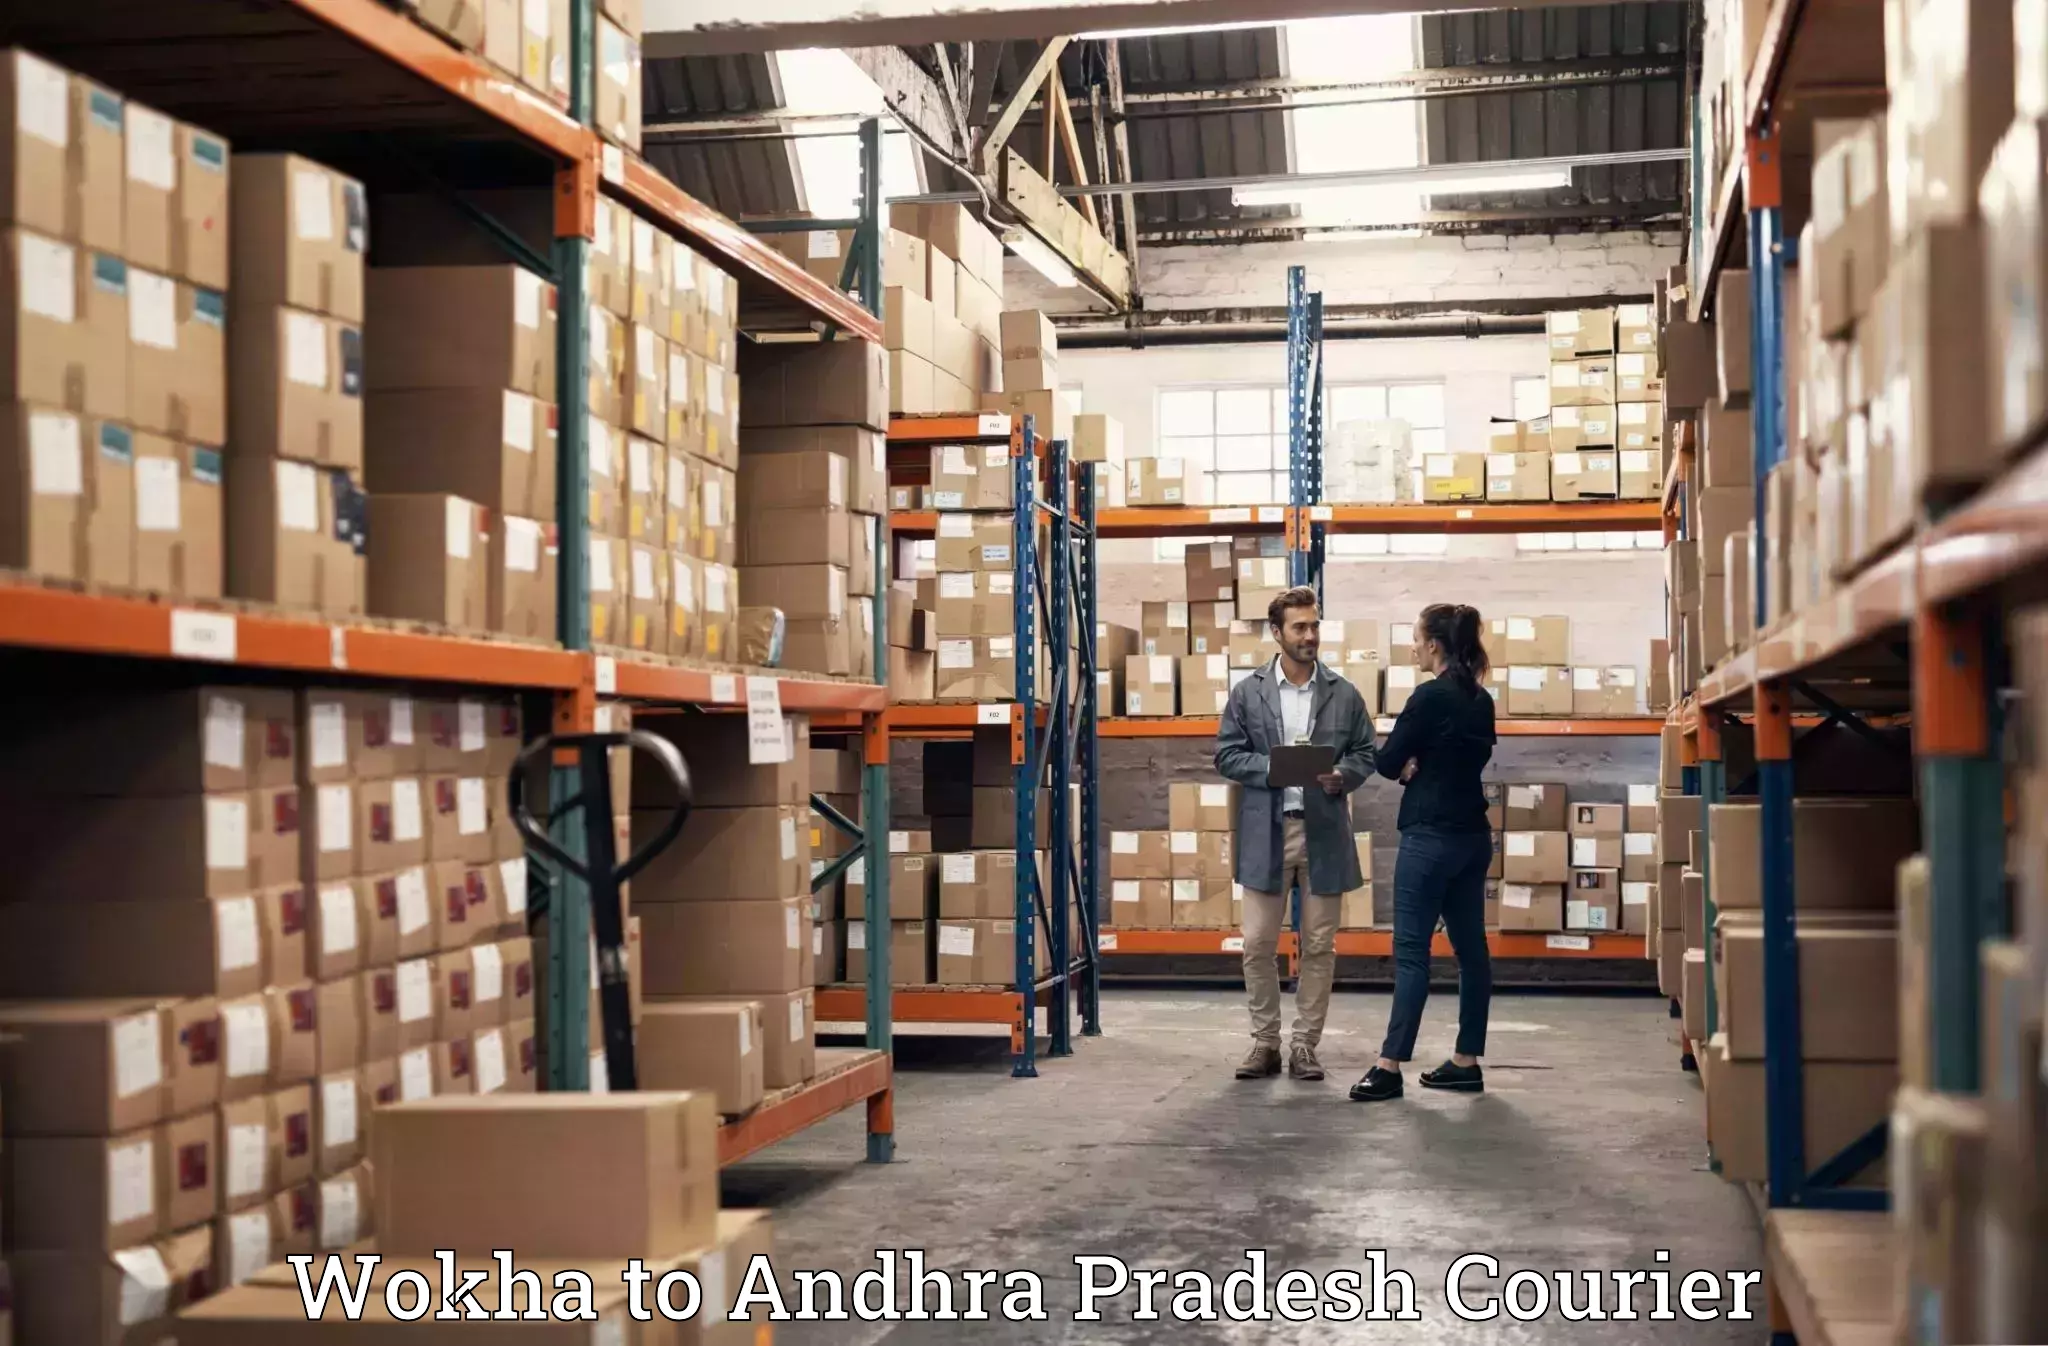 Furniture delivery service Wokha to Andhra Pradesh